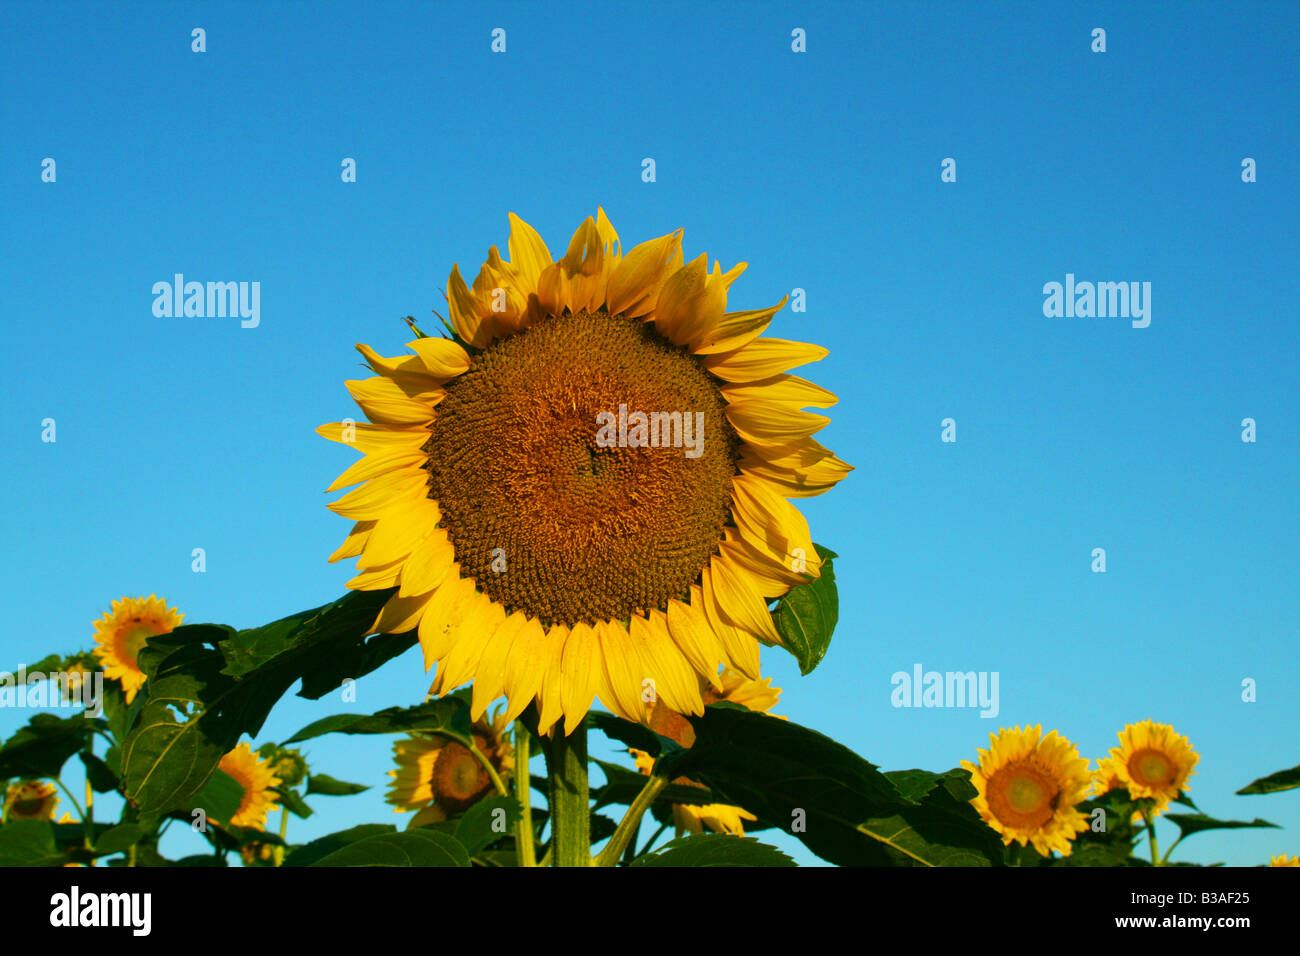 Sunflower farm, early morning, E USA, by Dembinsky Photo Assoc Stock Photo